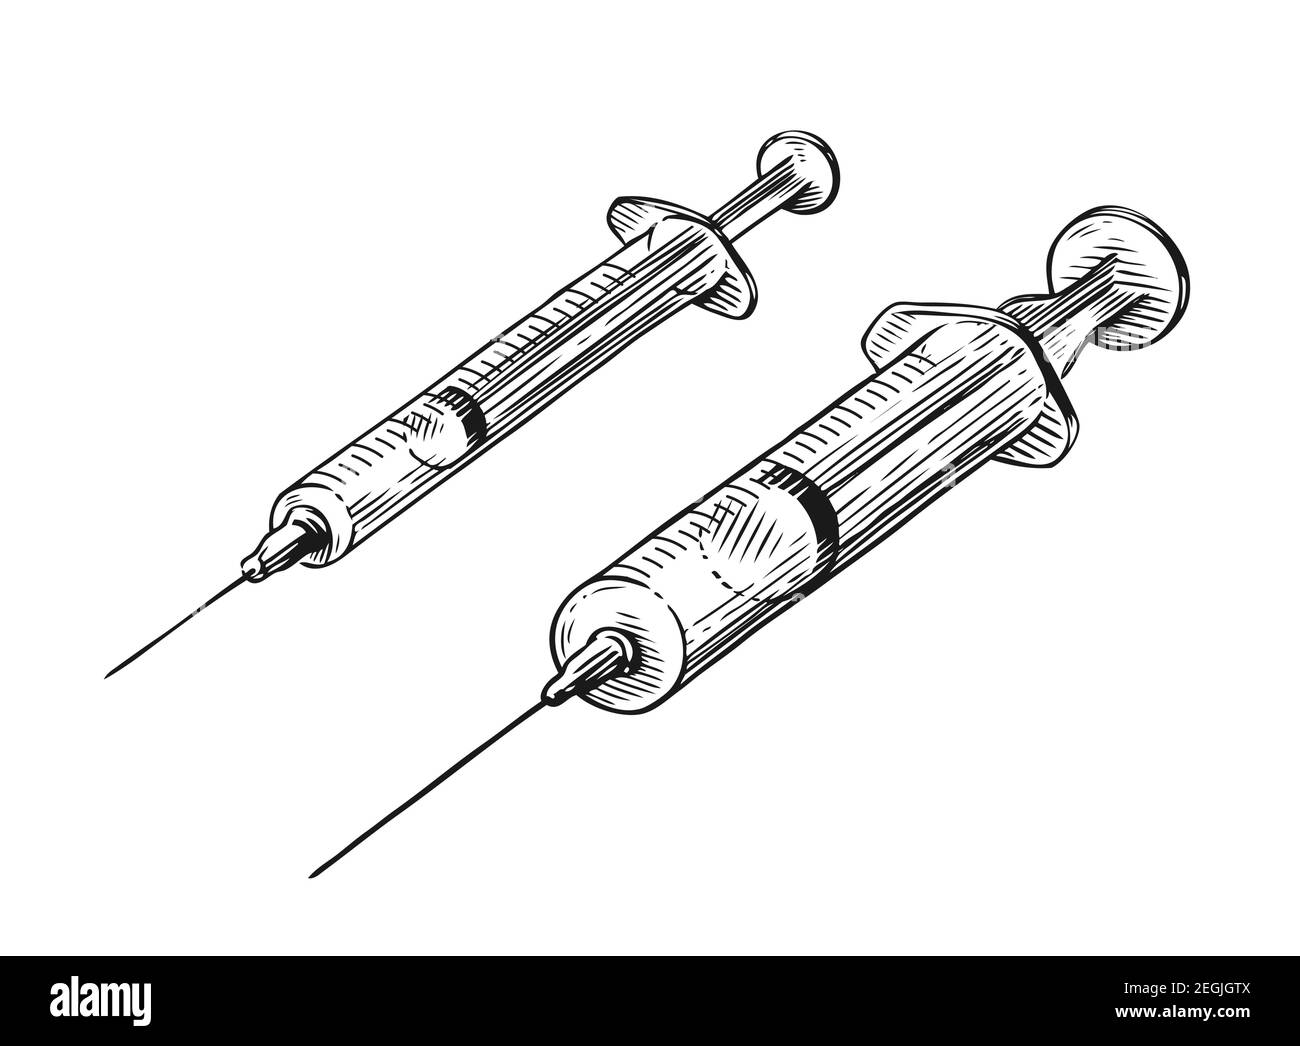 Spritze mit Impfstoff, handgezeichnete Skizze. Medizin, Medikament vintage Vektor Illustration Stock Vektor